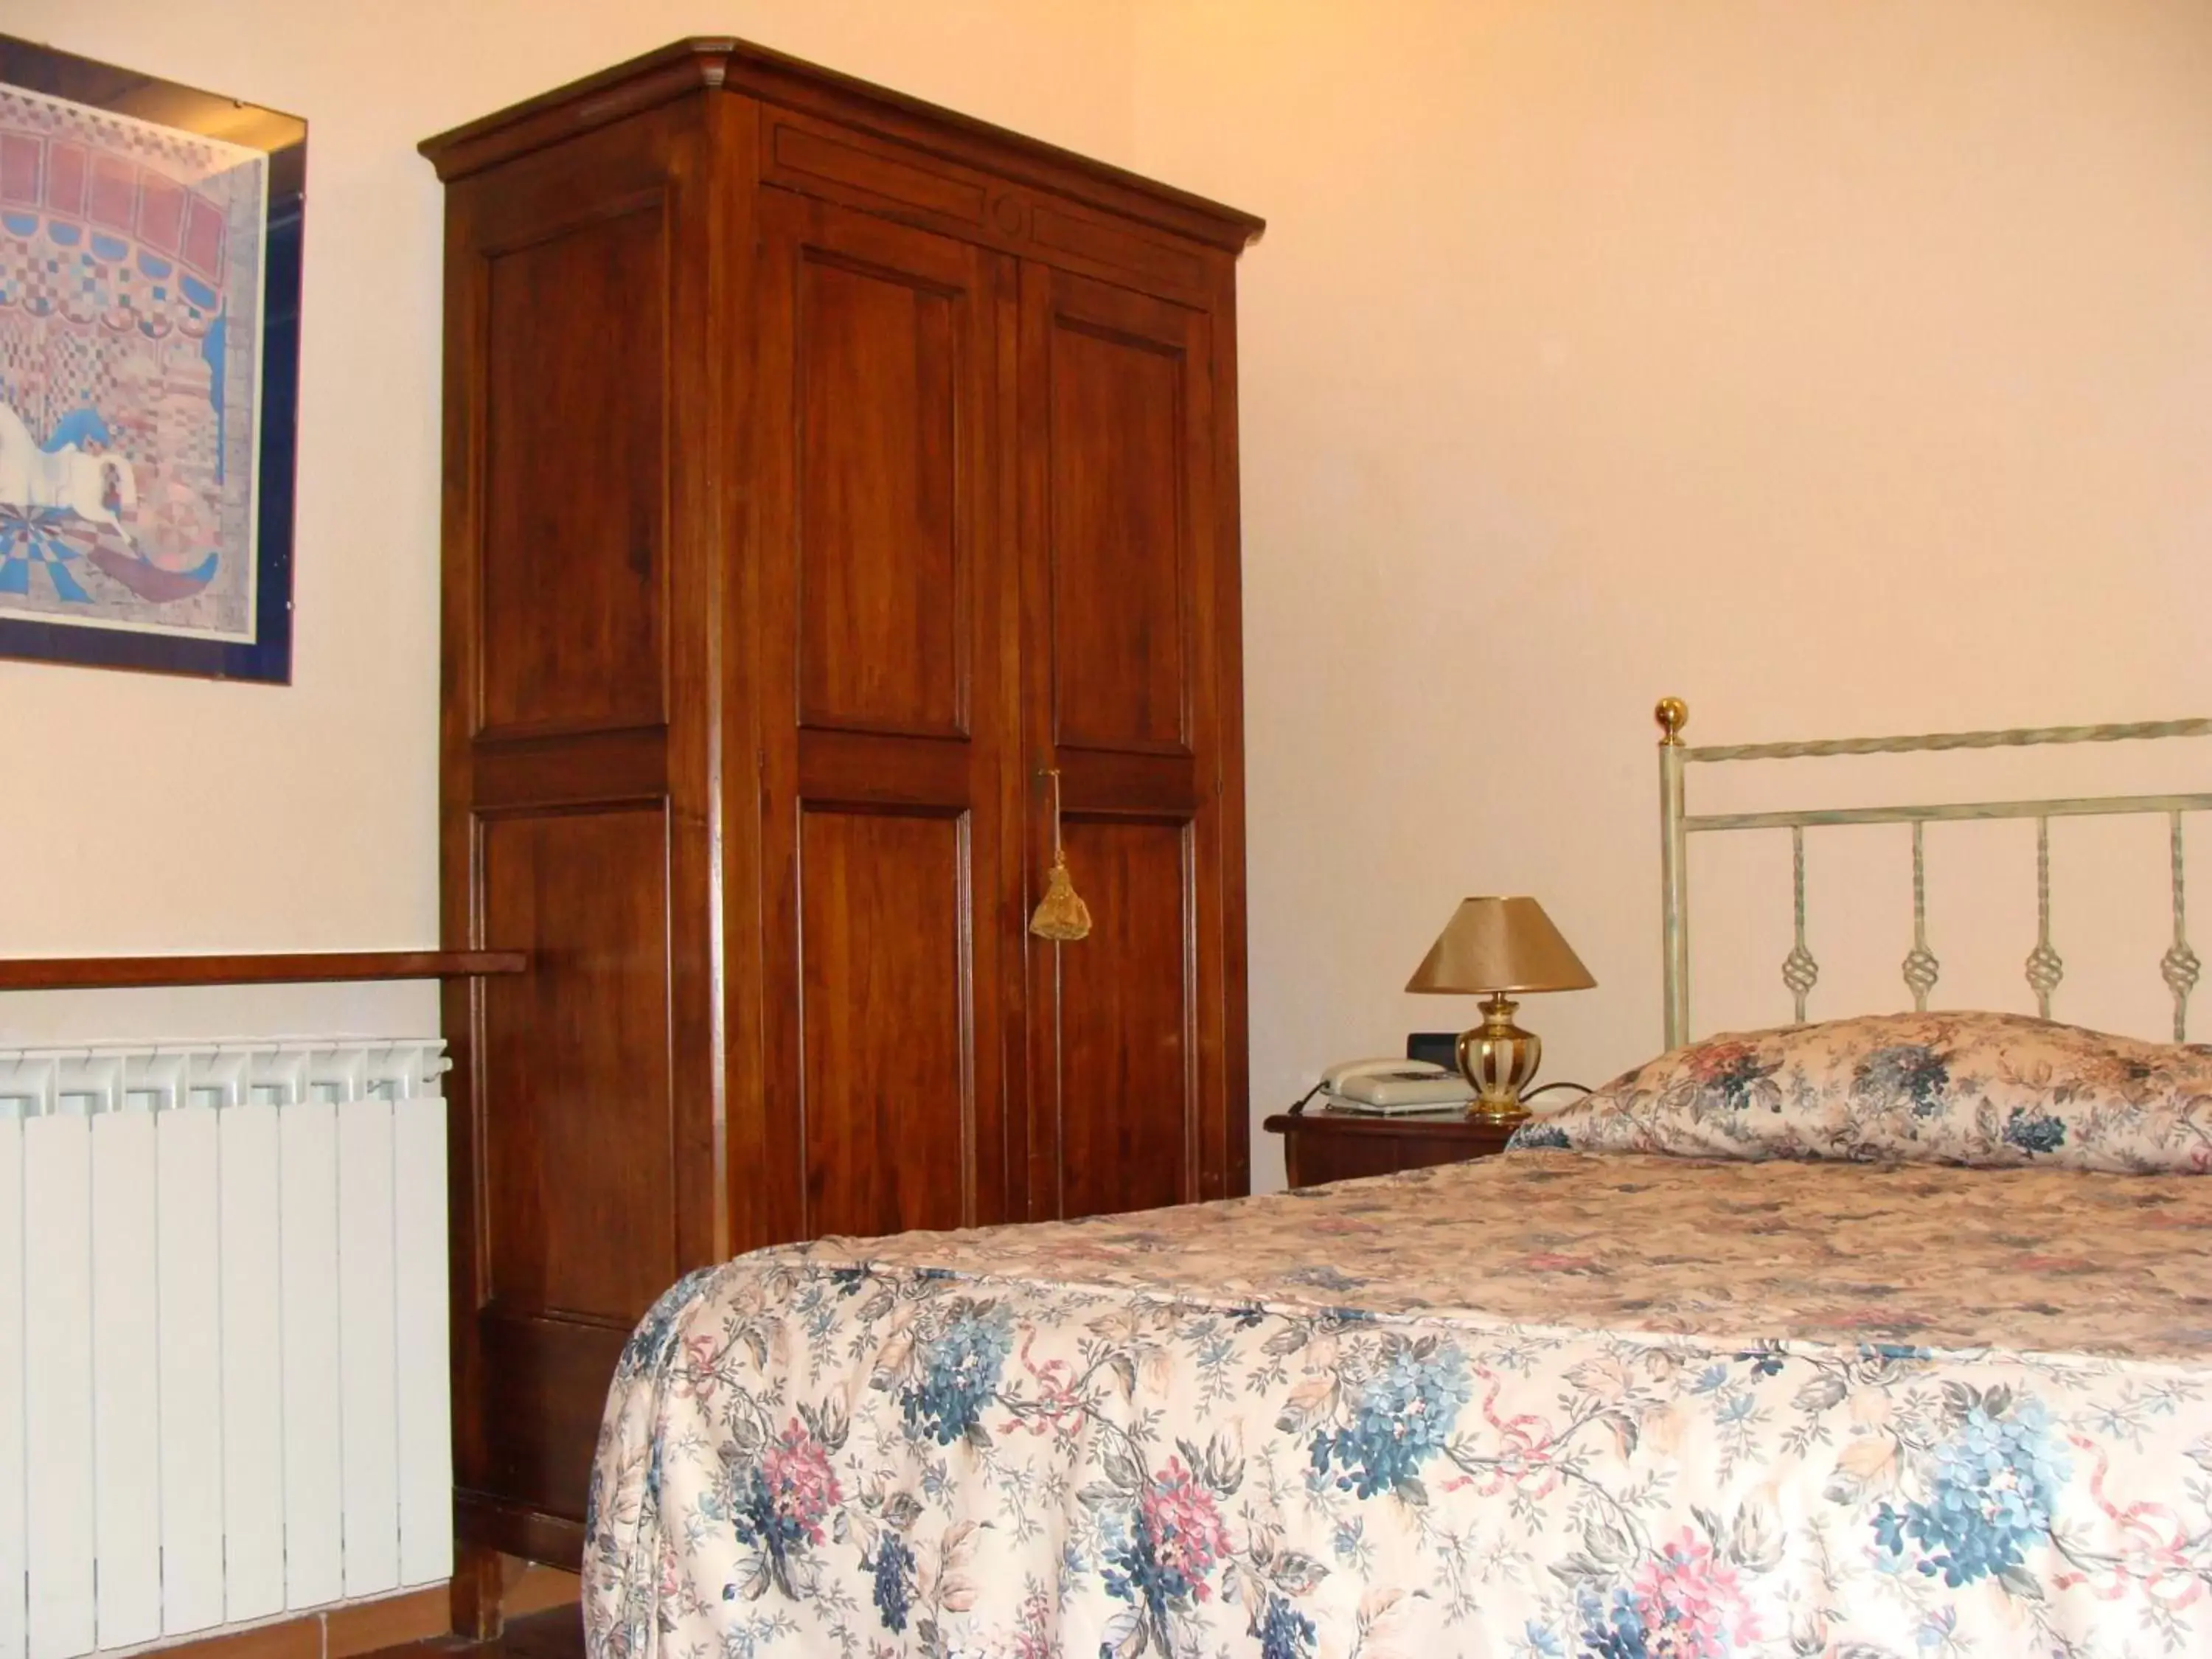 Bed, Room Photo in Soggiorno Michelangelo